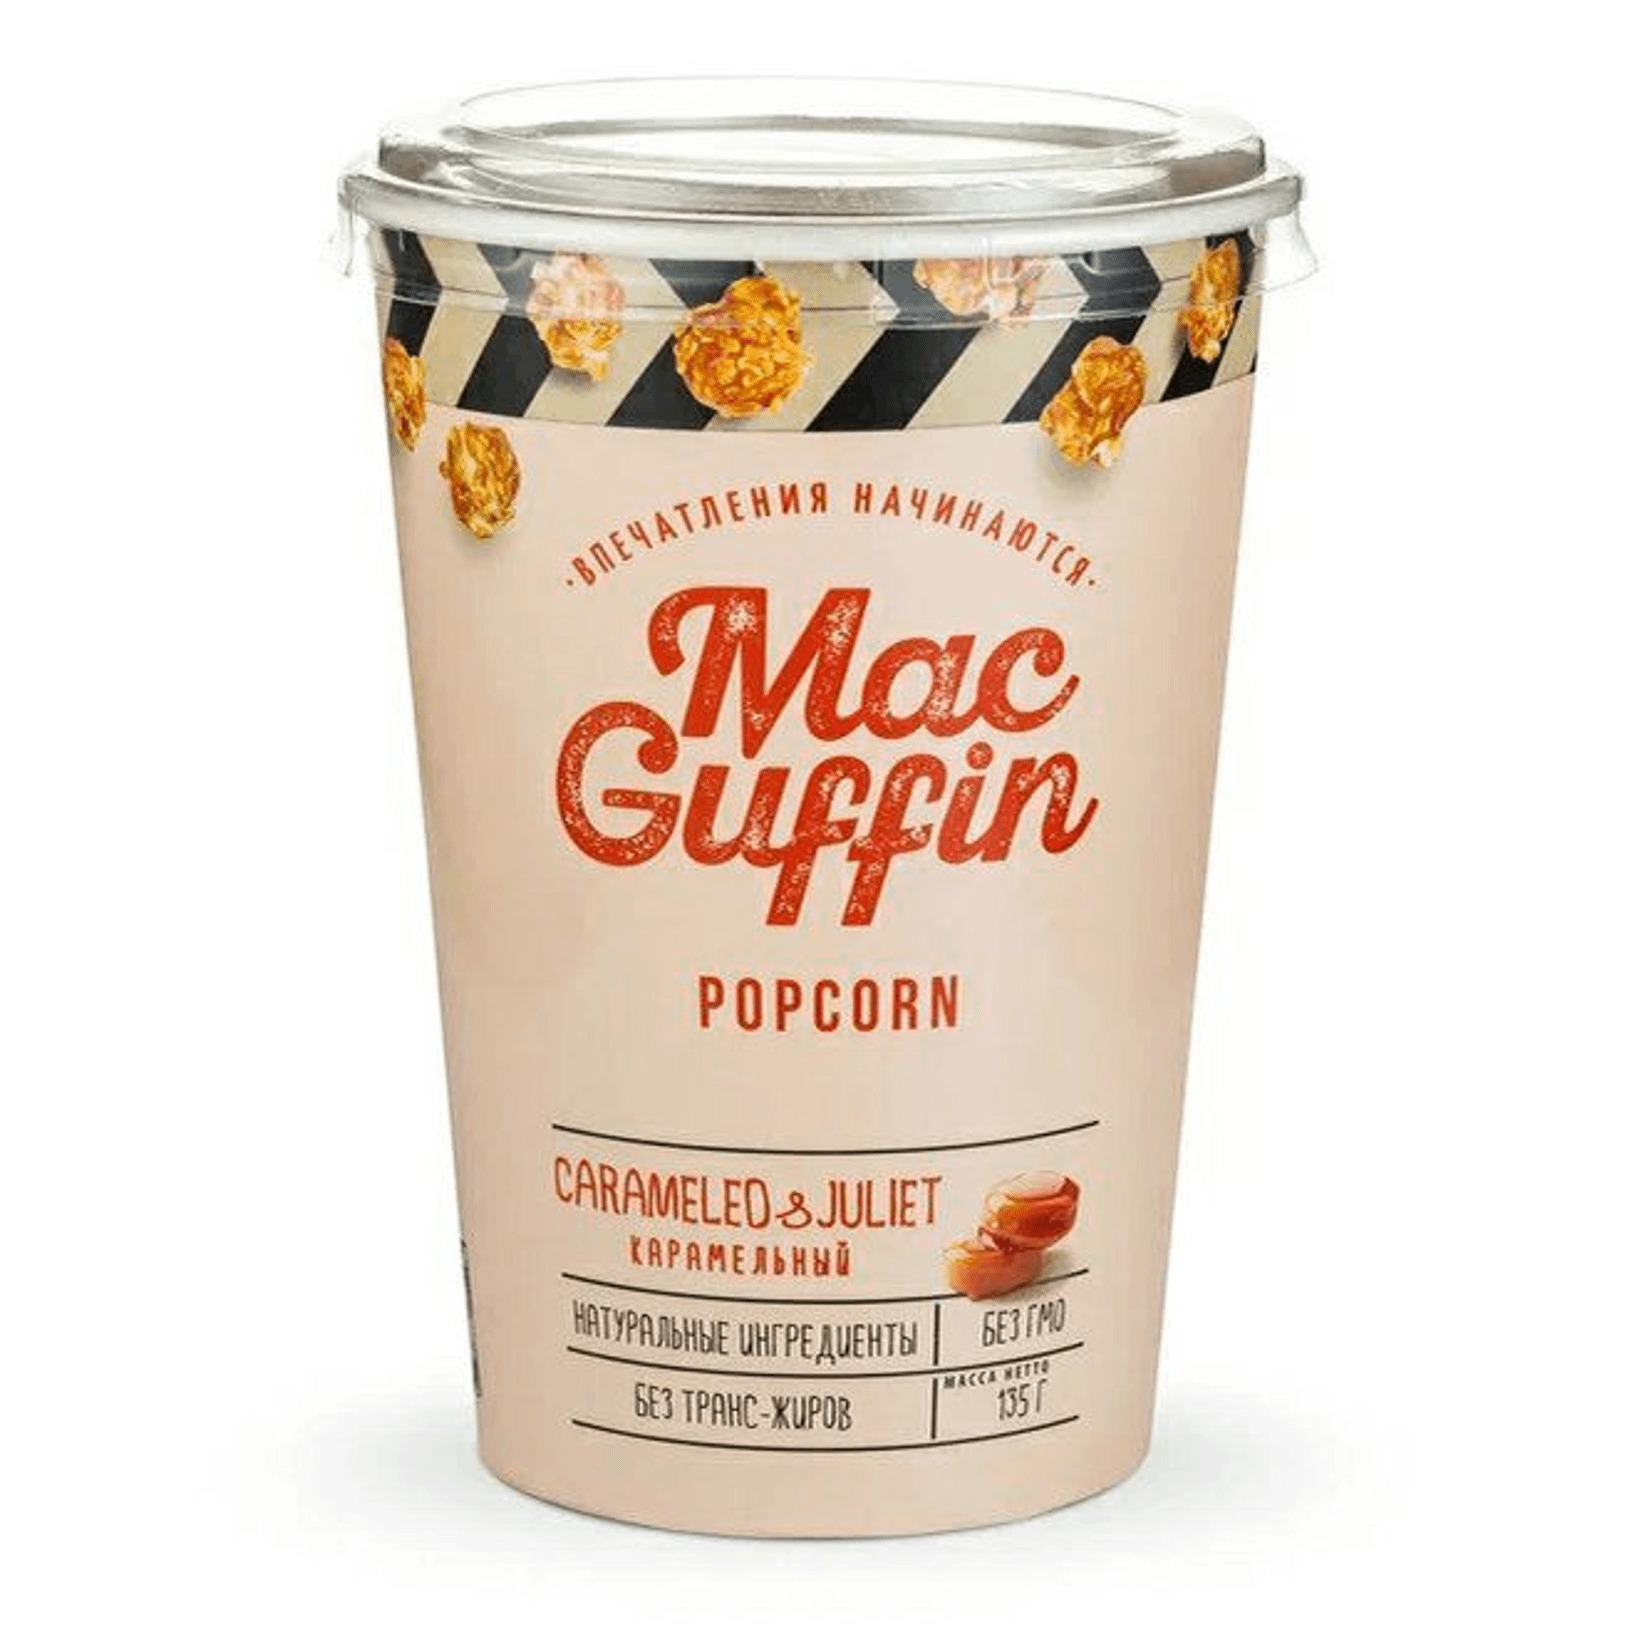 Попкорн MacGuffin карамельный, 135 г попкорн royal premium шоколадный 165 г